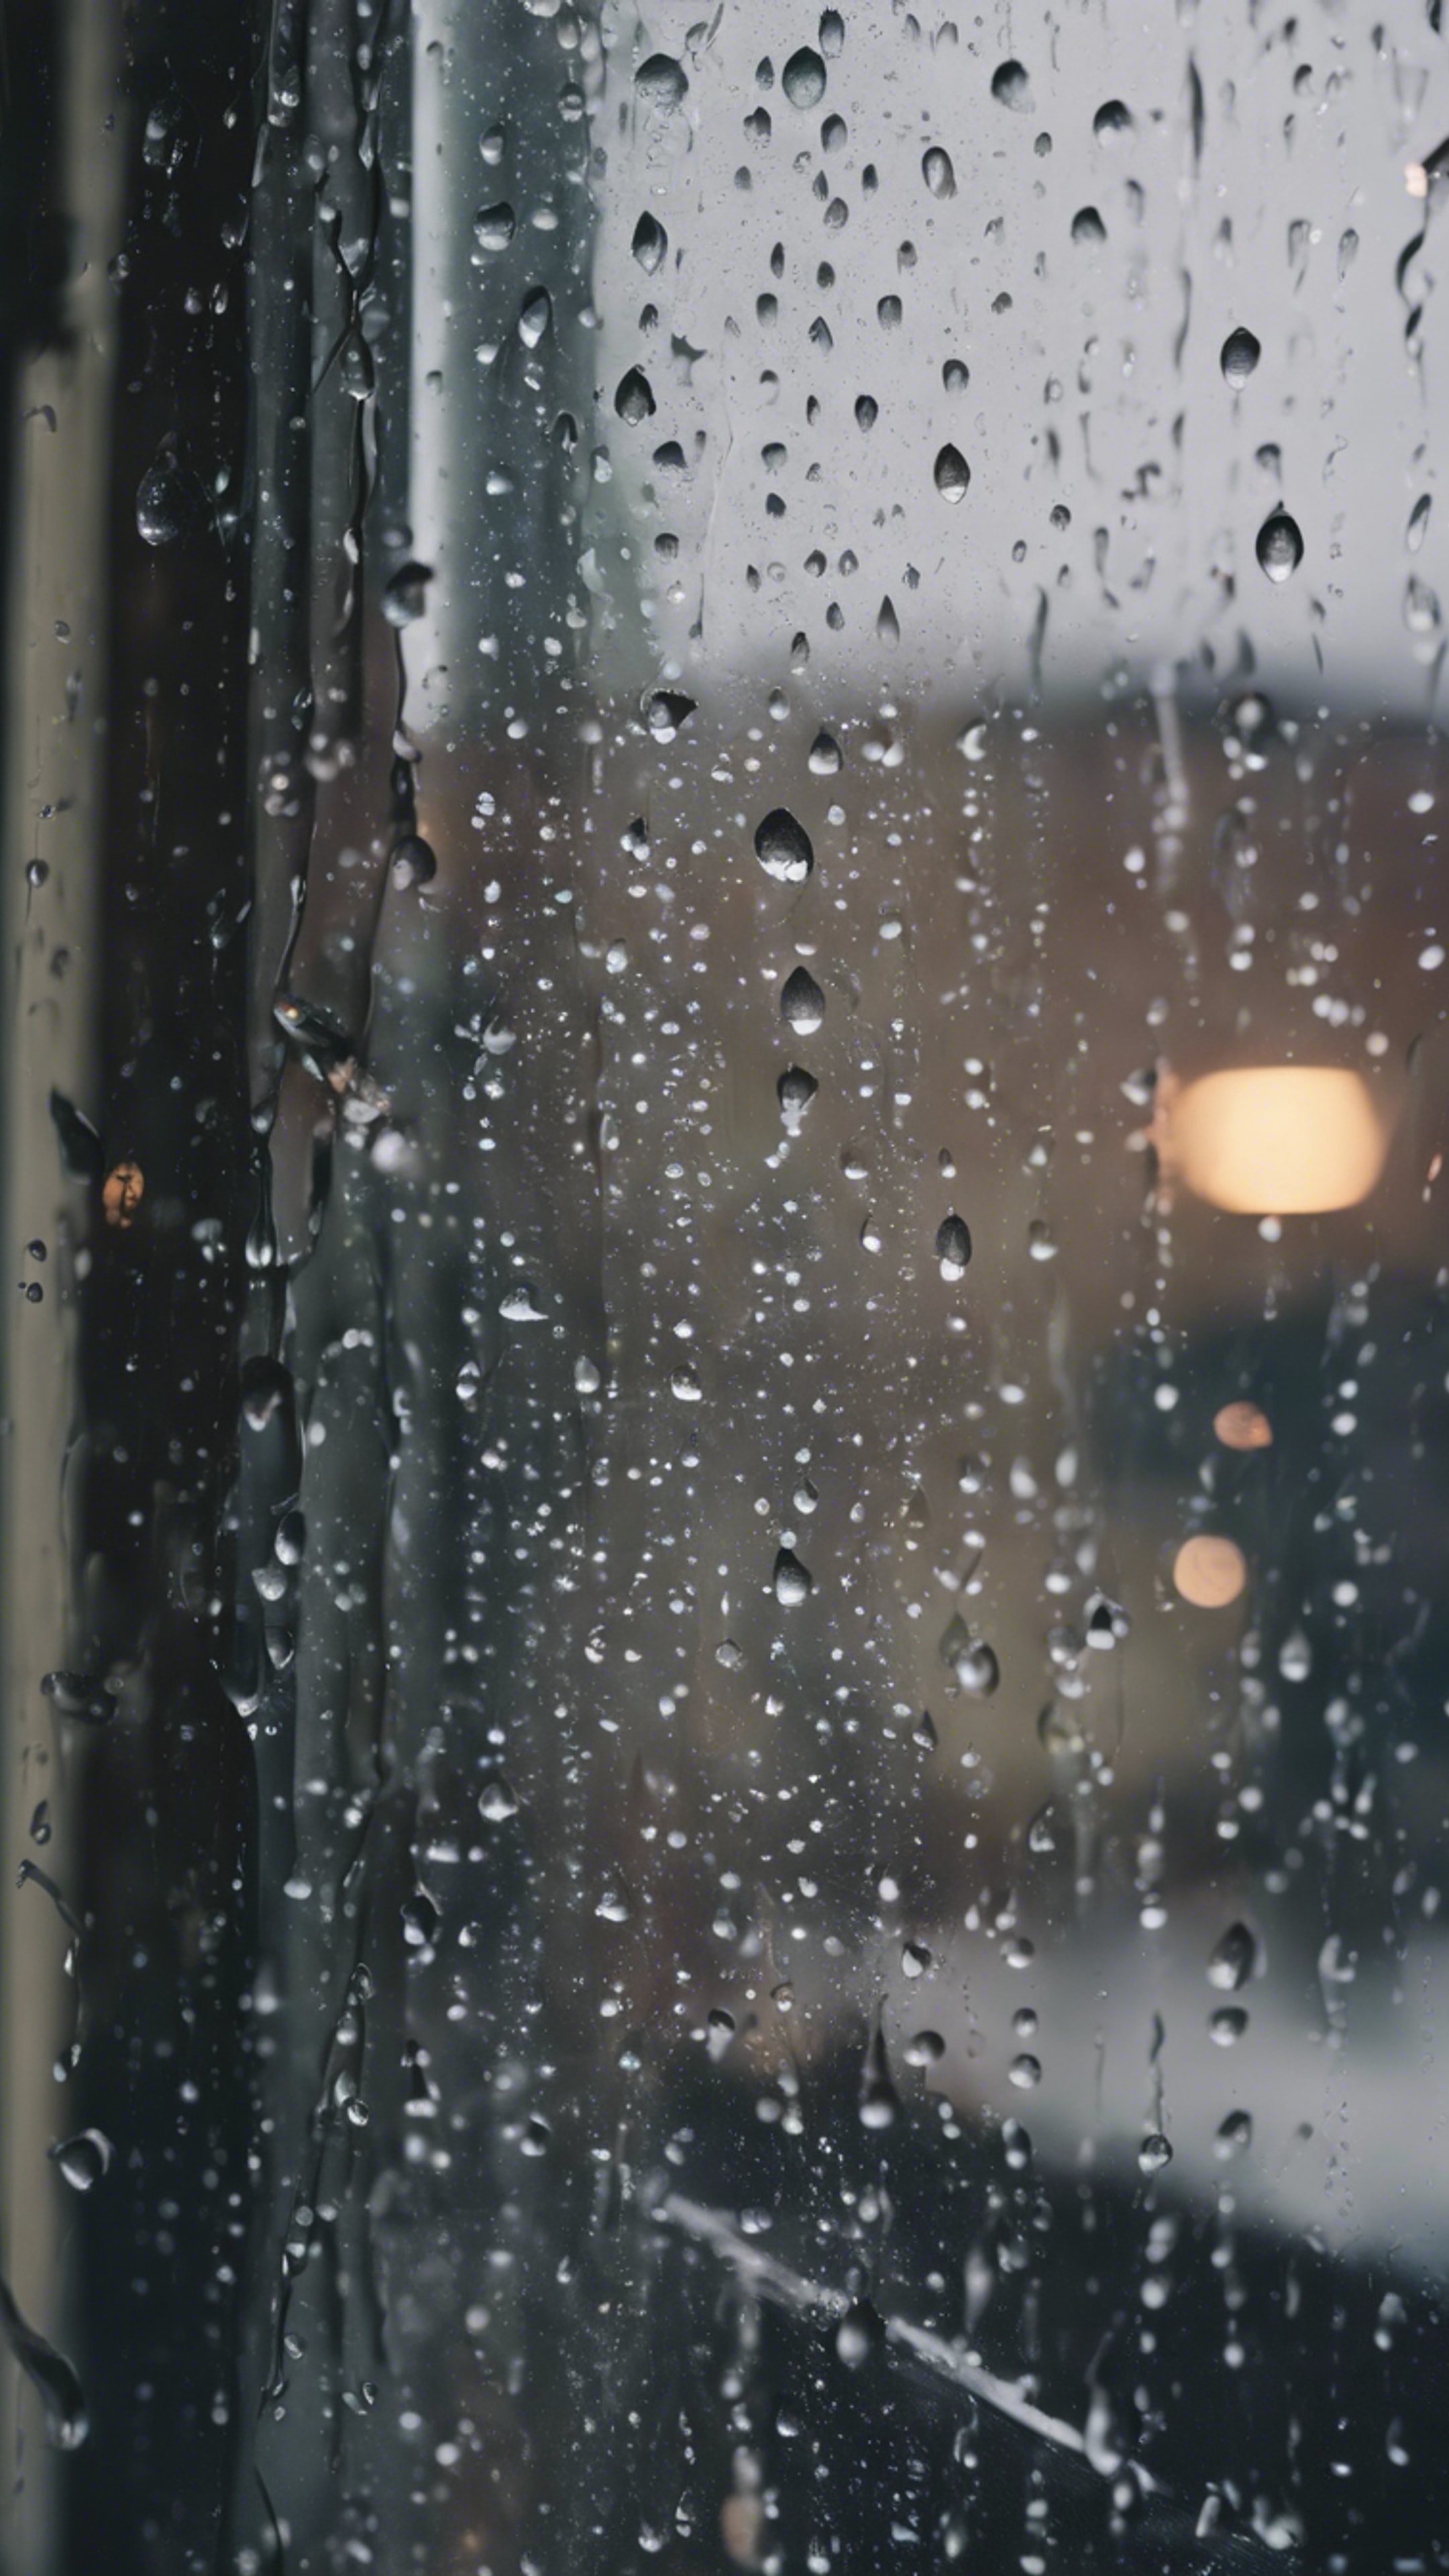 A heavy rainstorm viewed through a window, the droplets streaking down the glass 벽지[548369da7c5b4ee9bdb0]